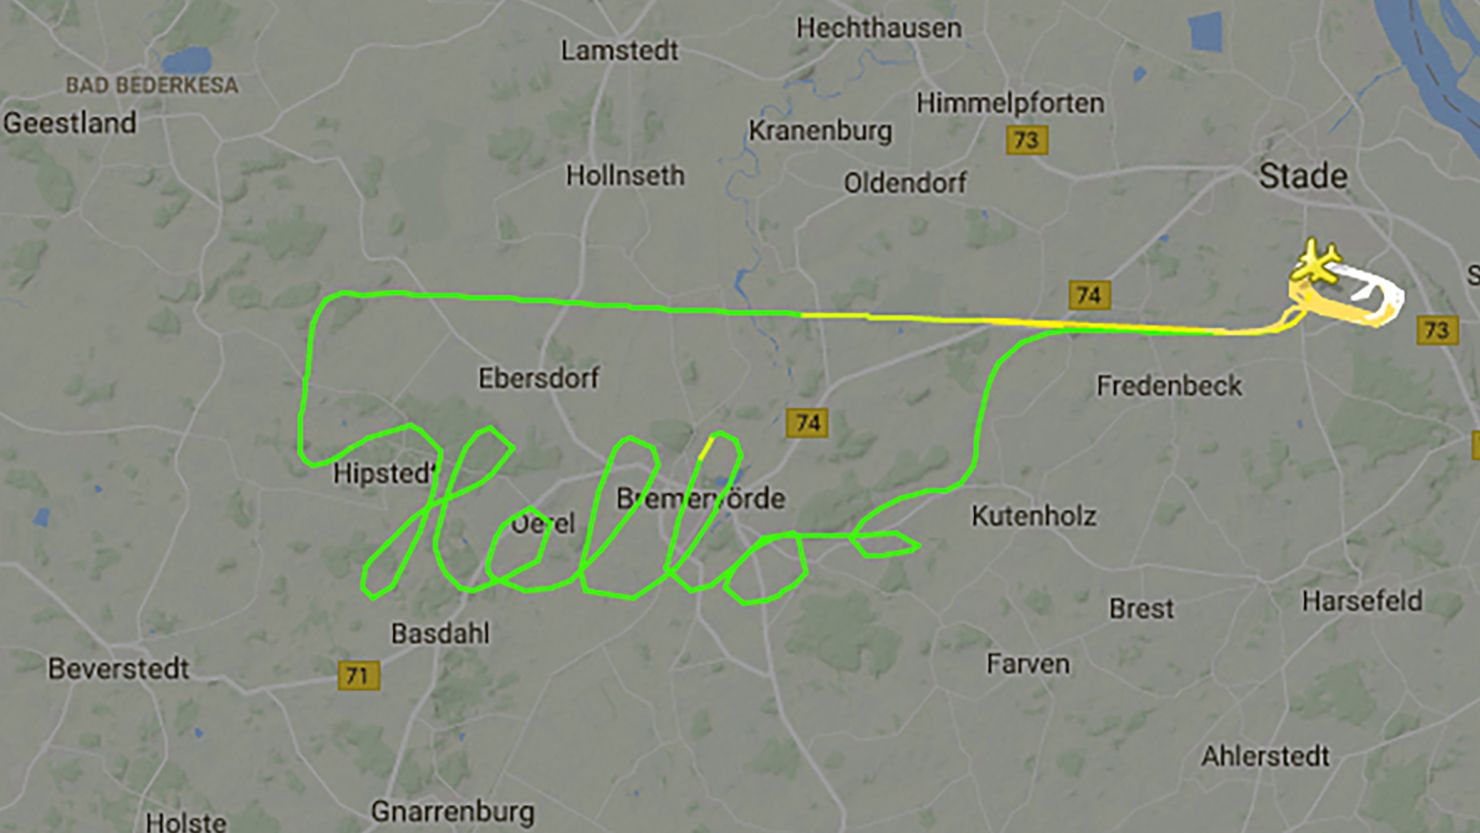 Aircraft path over Germany spells hello on radar, as captured by Flightradar24